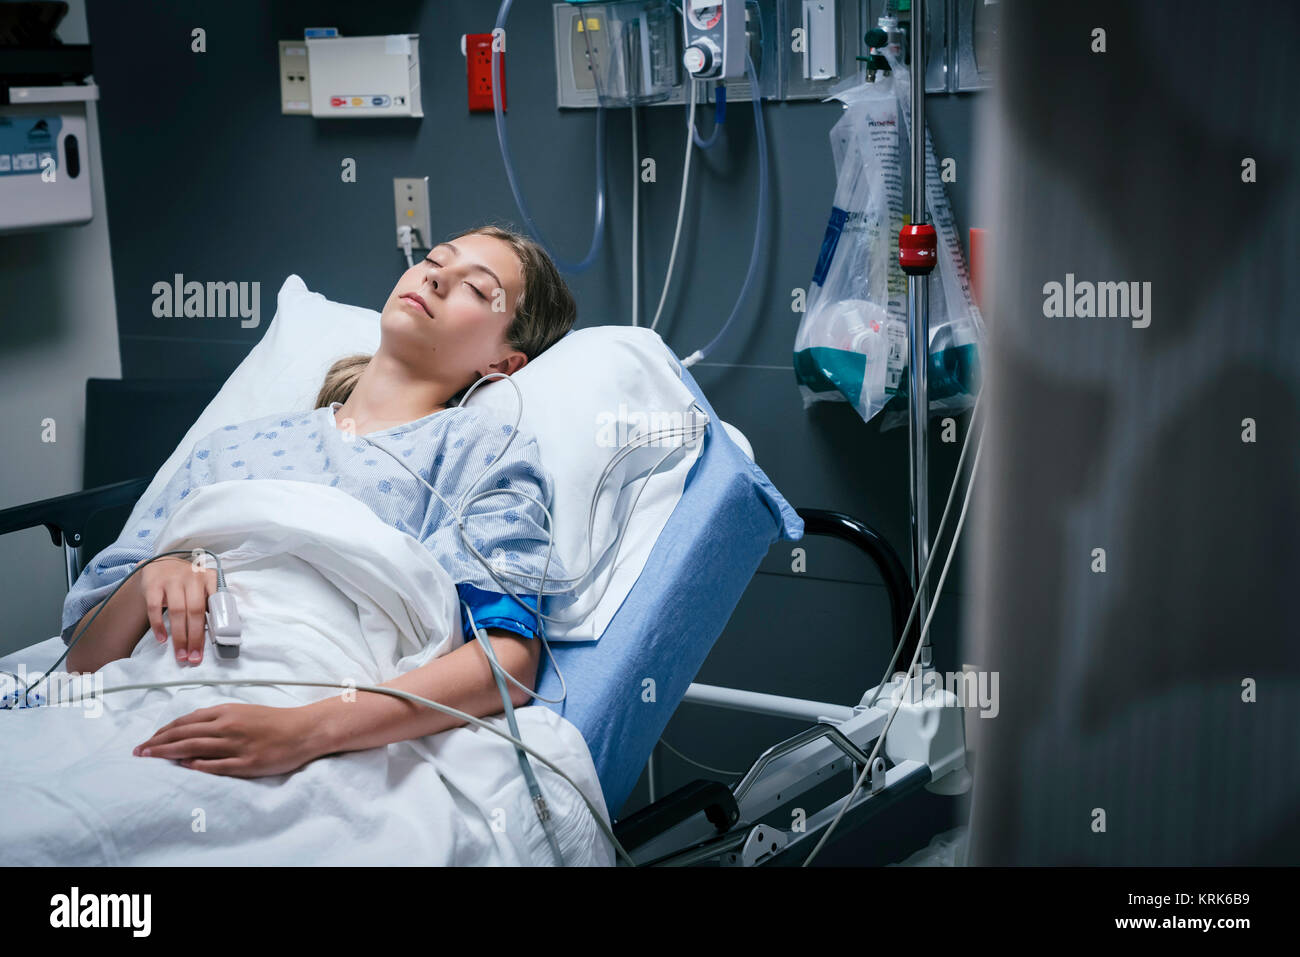 Caucasian girl sleeping in hospital bed Stock Photo